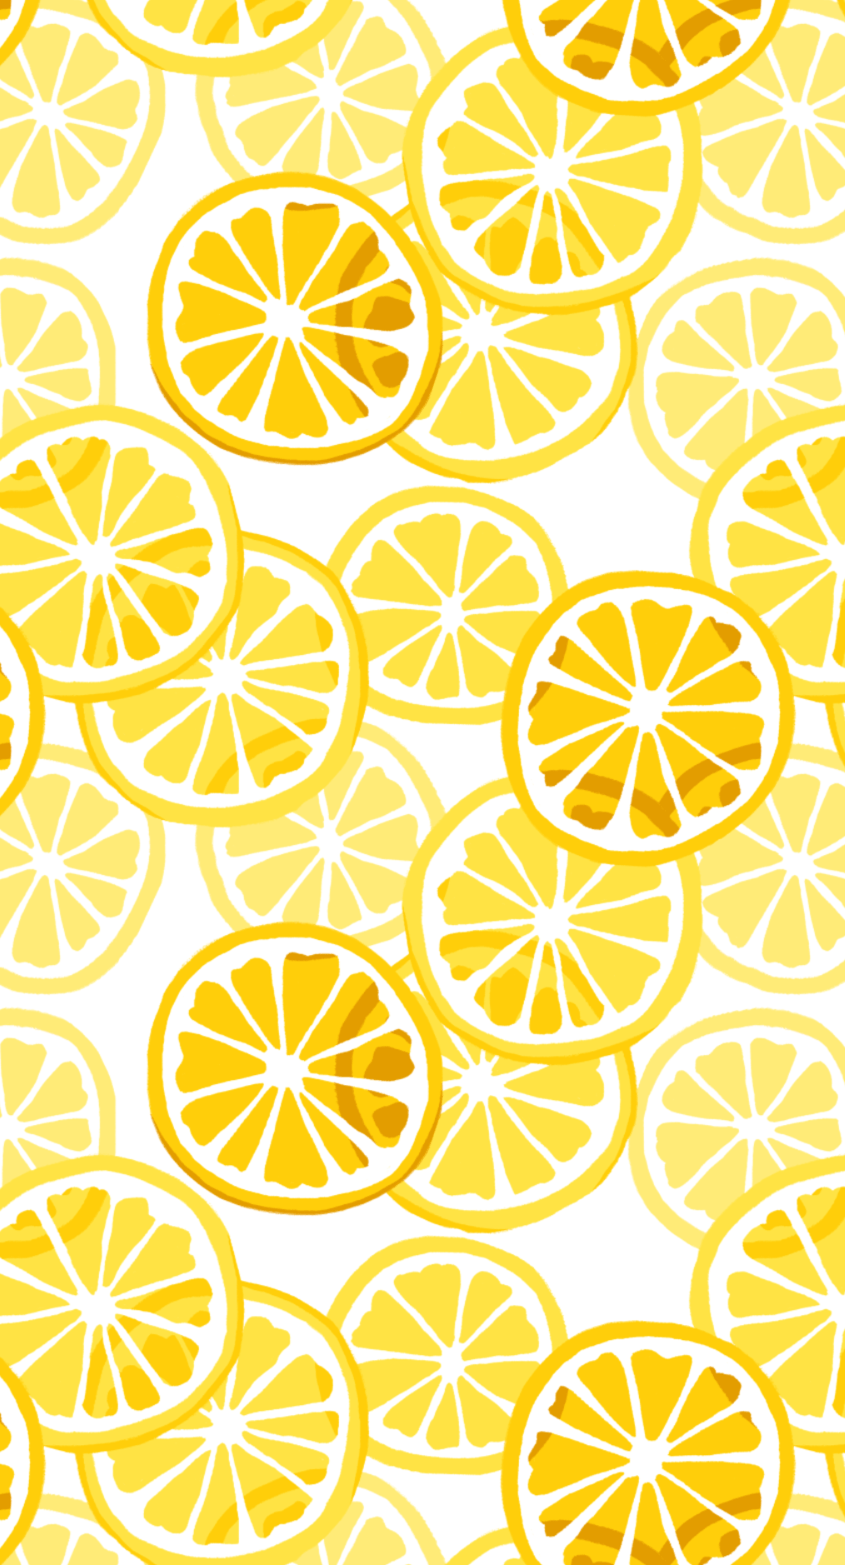 A pattern of yellow lemon slices on a white background - Lemon